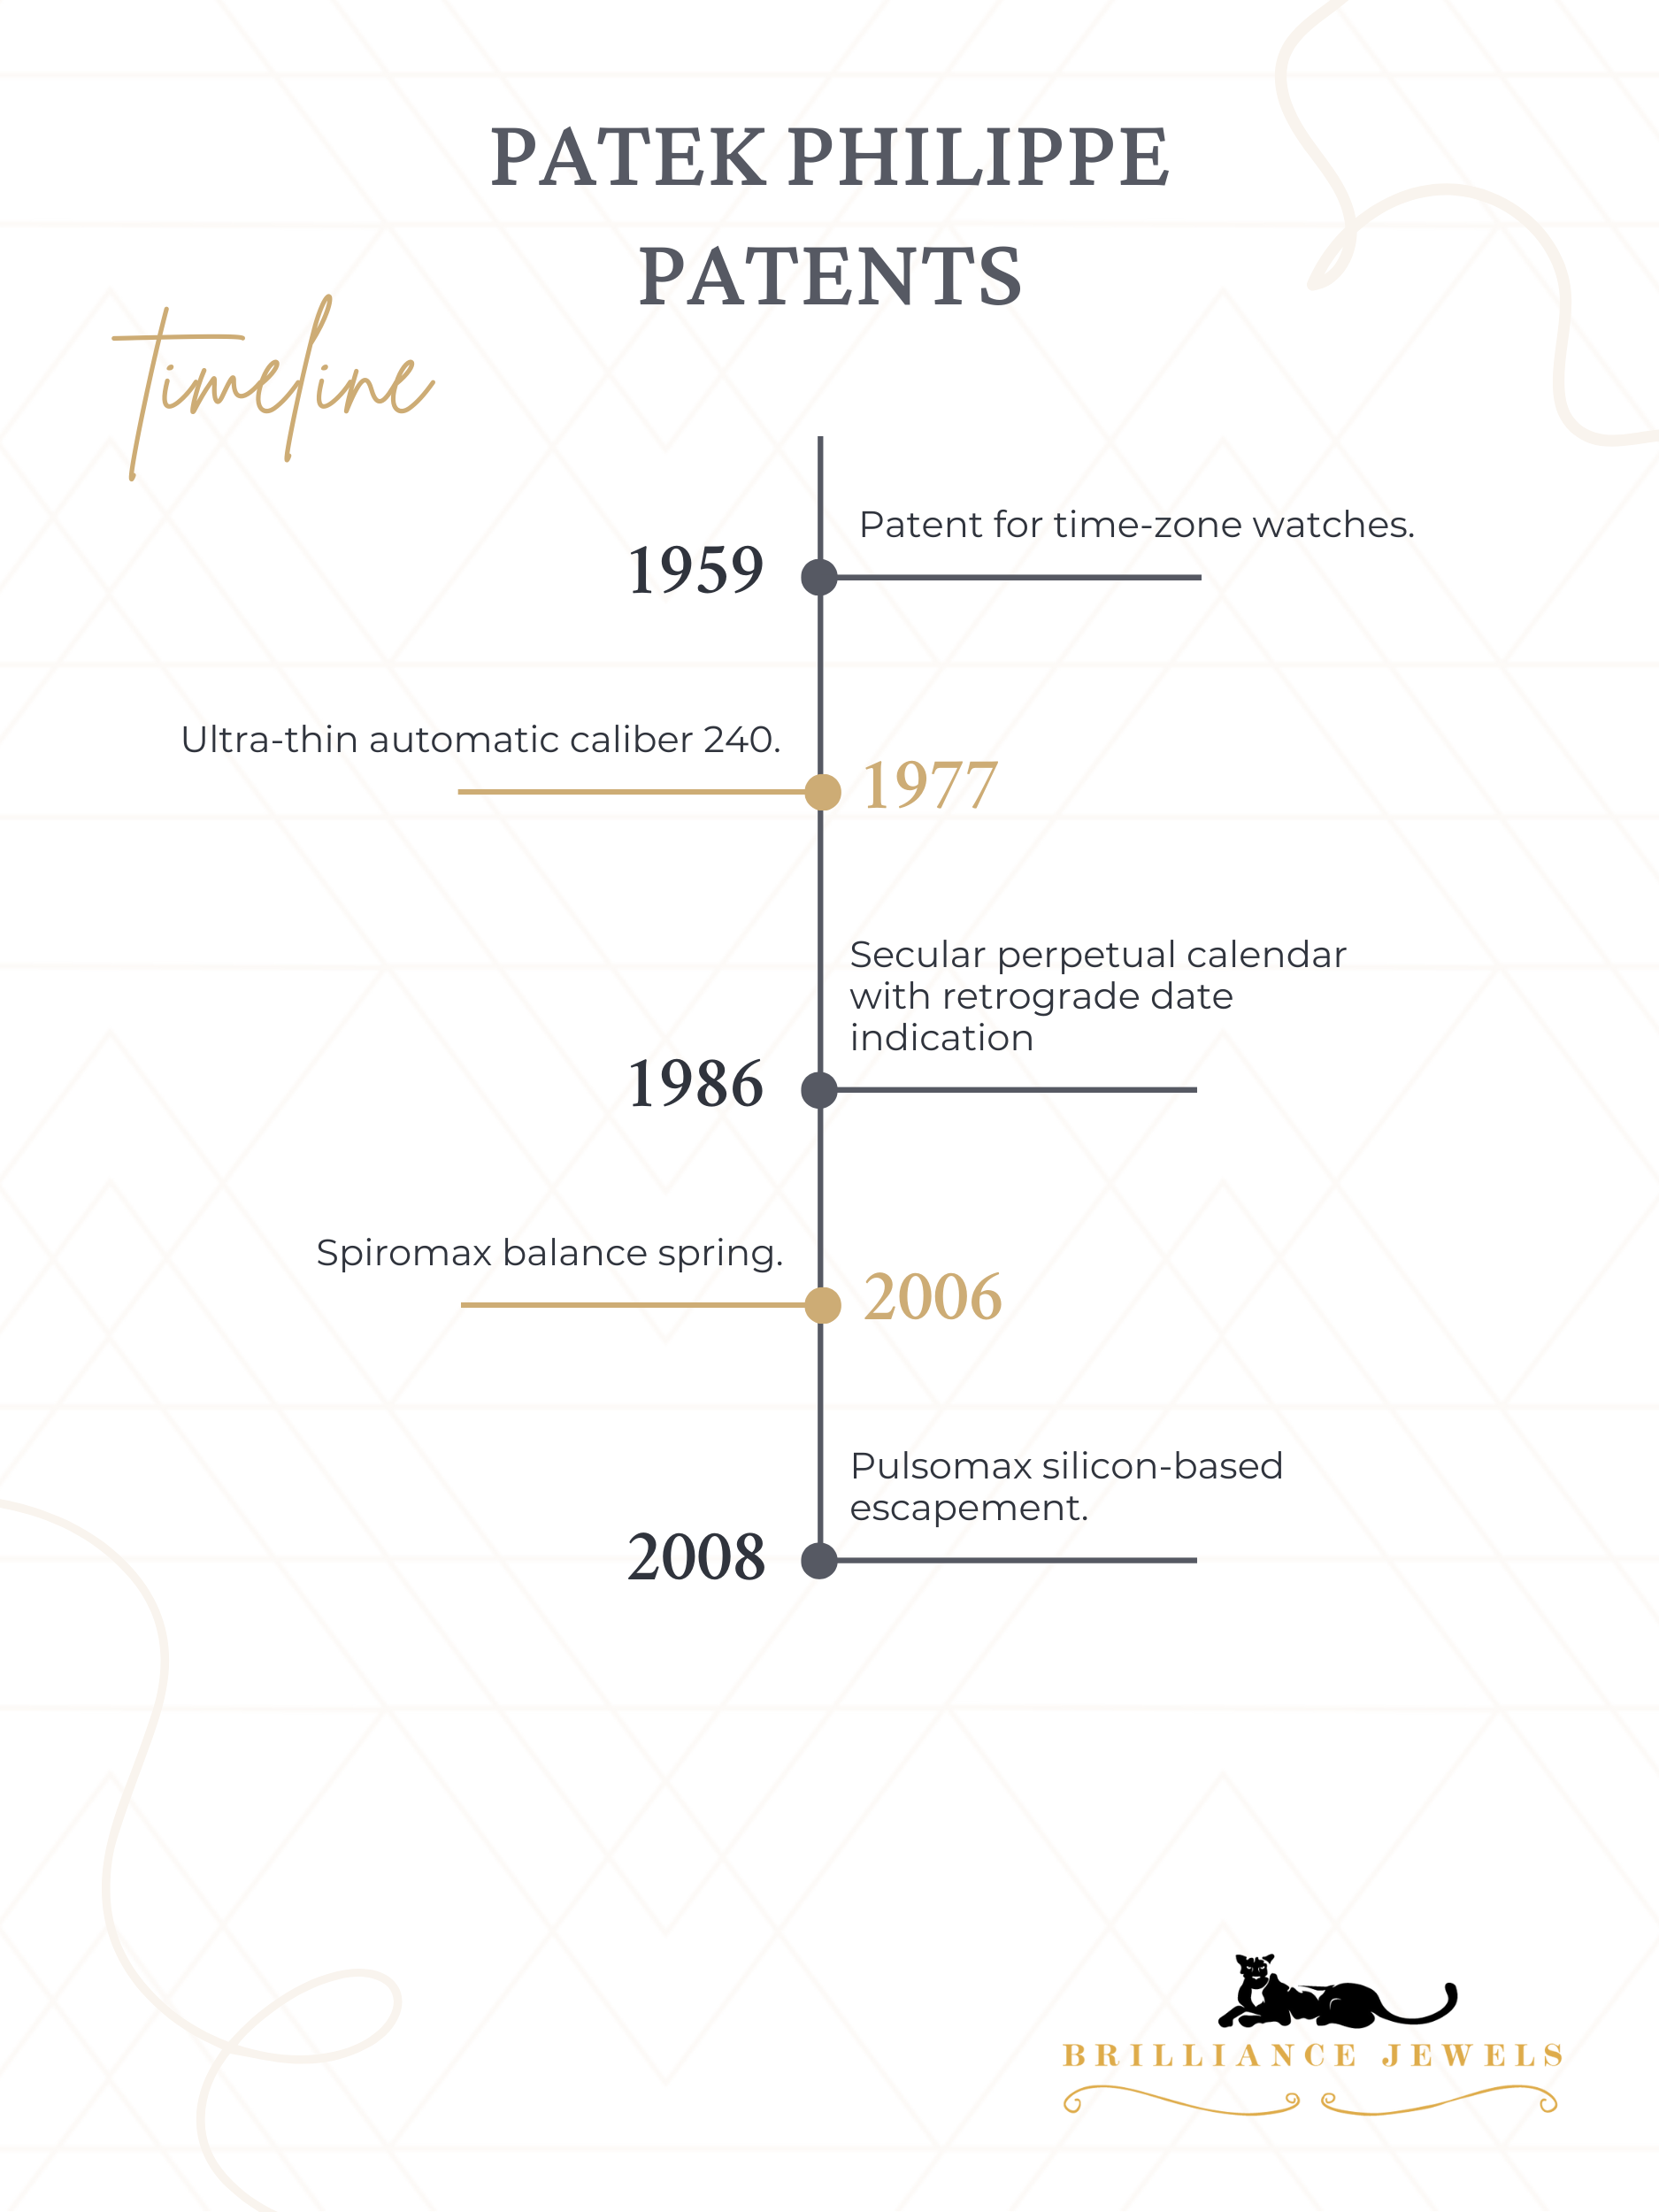 Patek Philippe Patents Timeline - 2